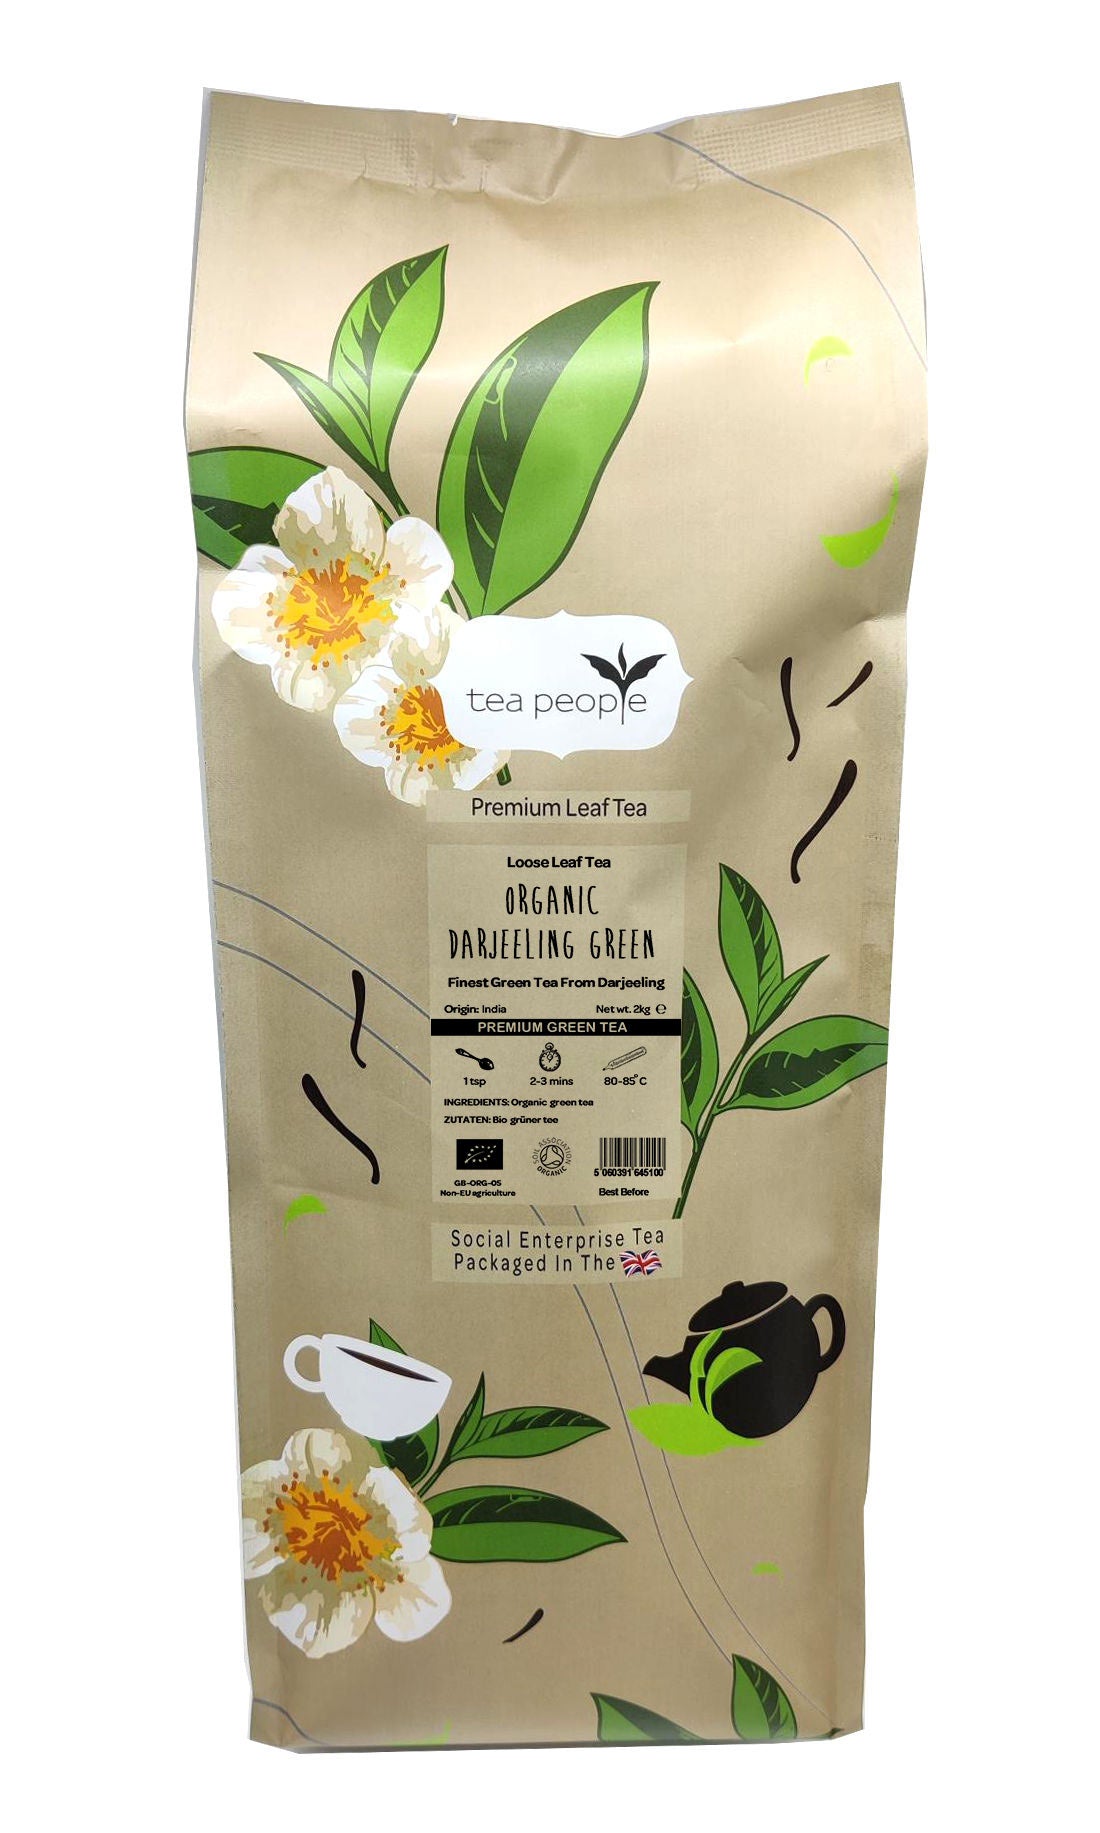 Organic Darjeeling Green - Loose Green Tea